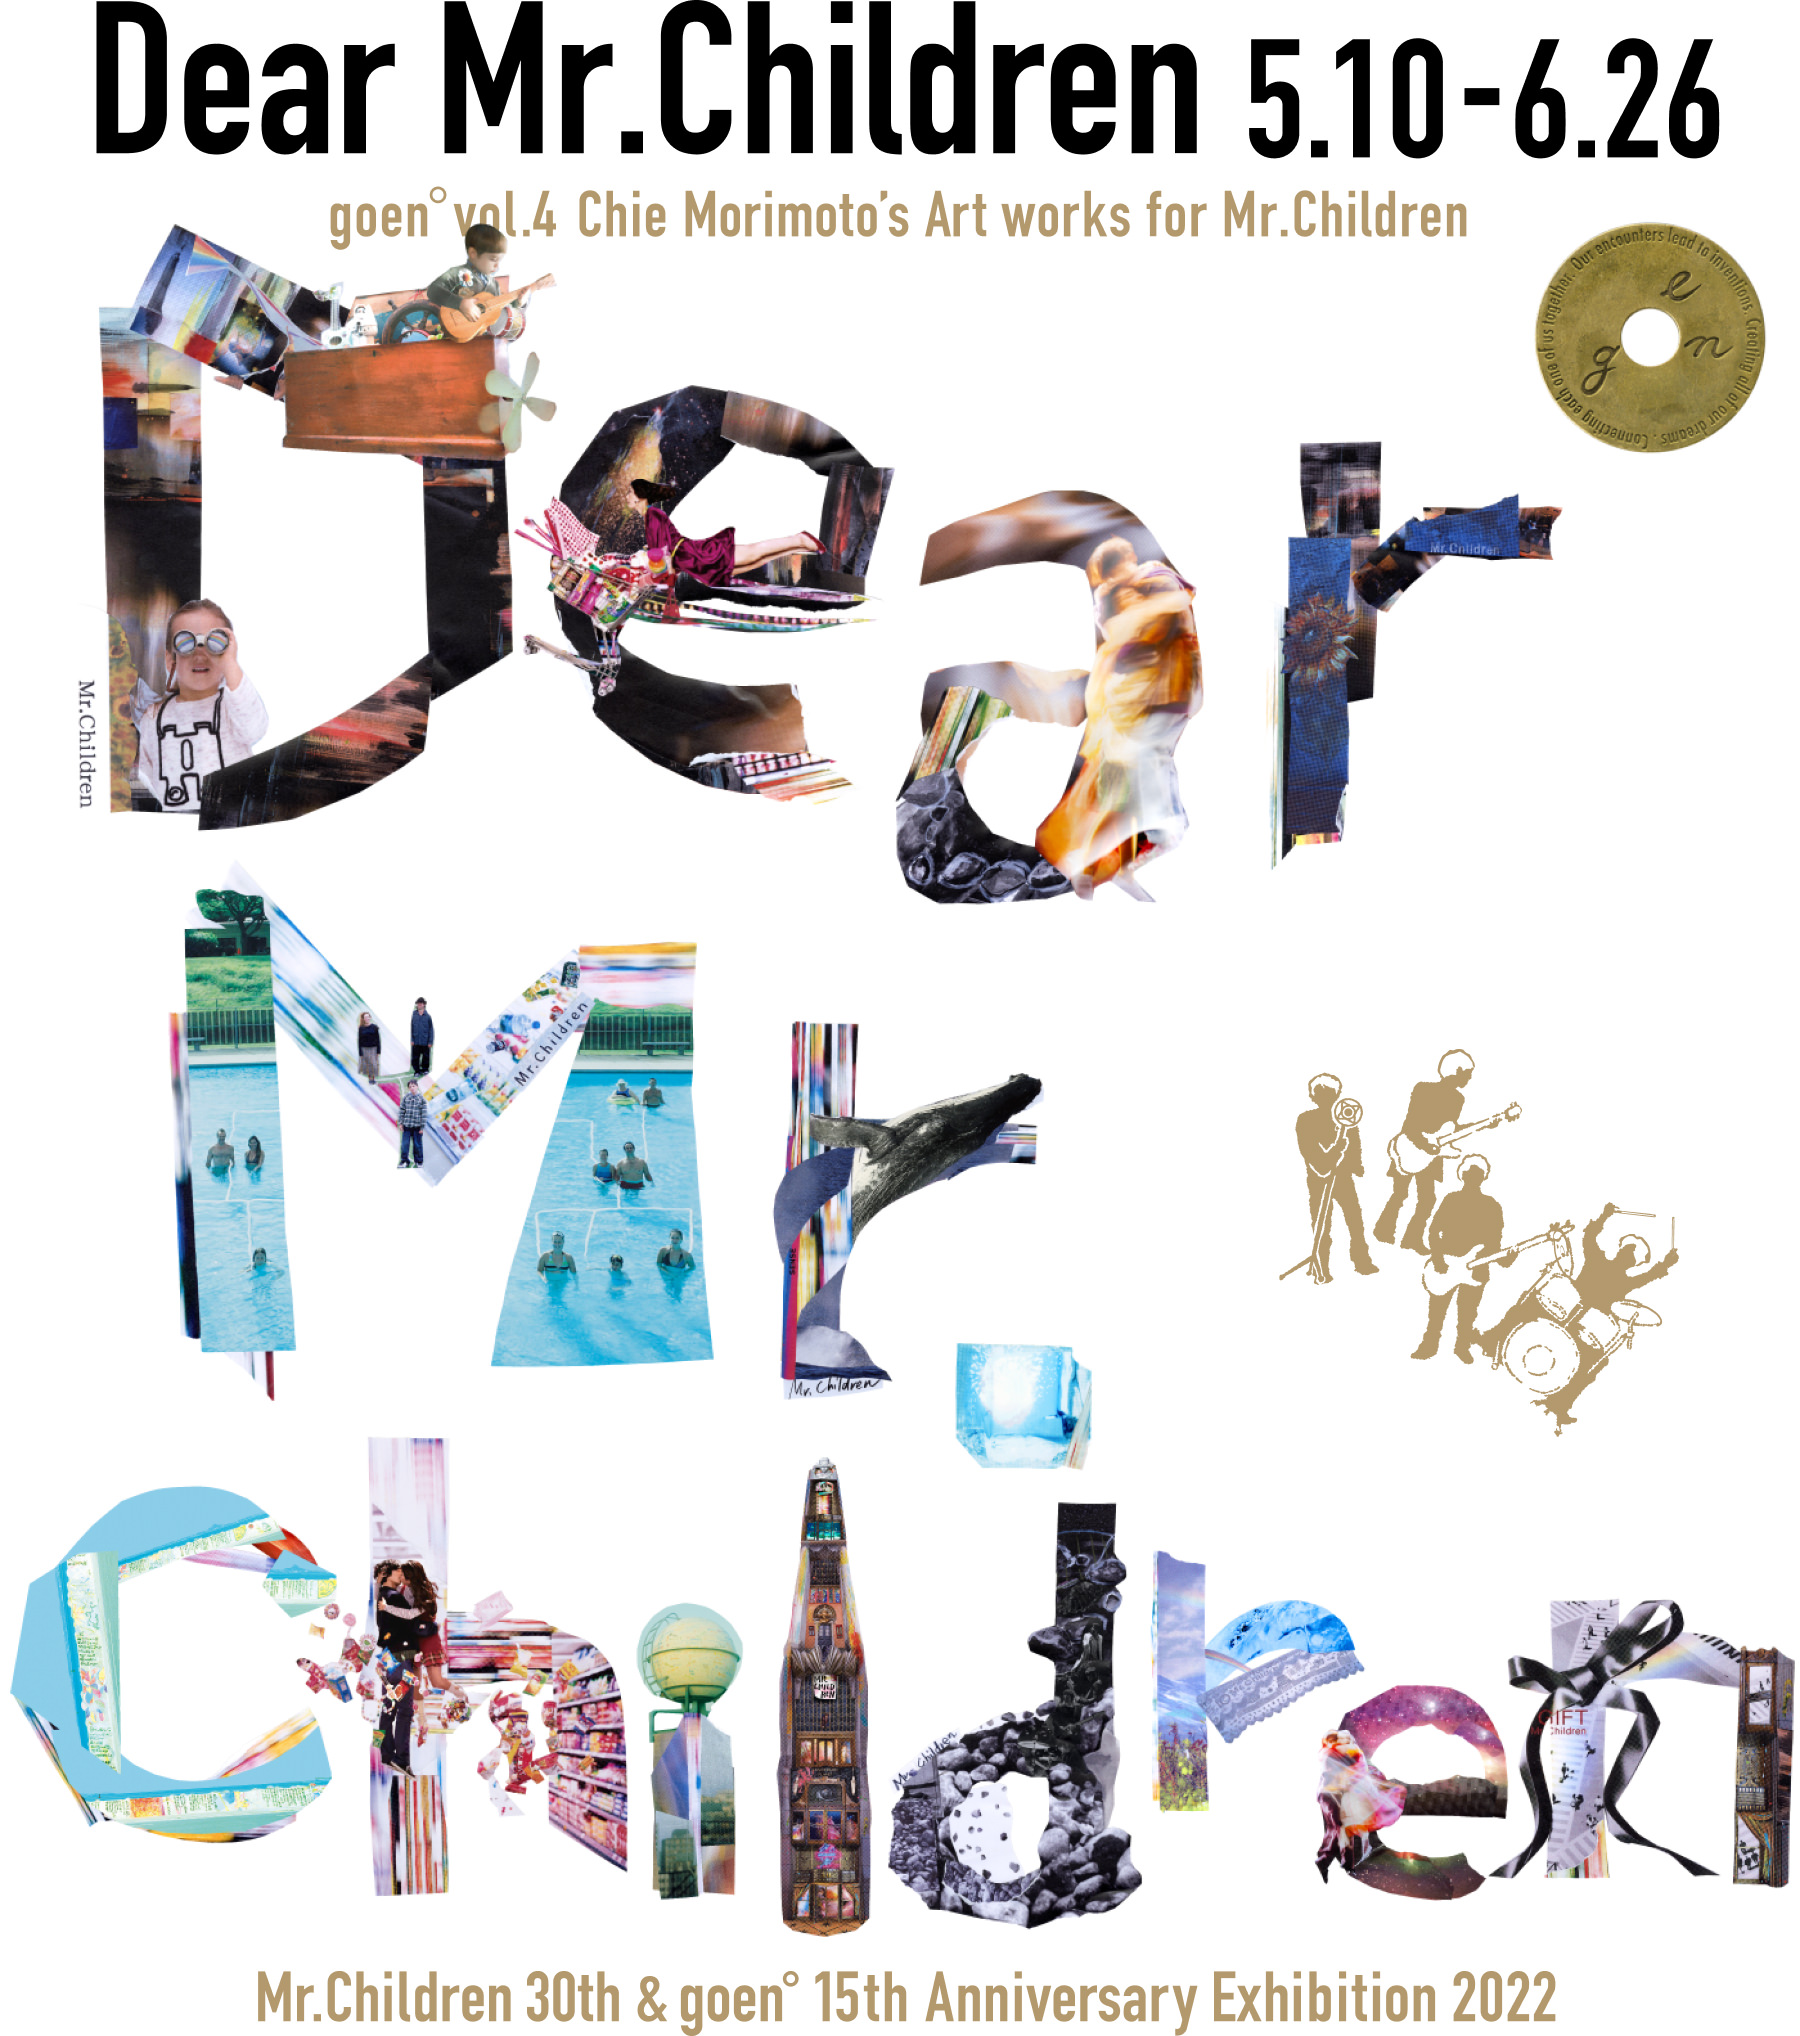 Dear Mr.Children 5.10-6.26 | goen° vol.4 Chie Morimoto's Art works for Mr.Children